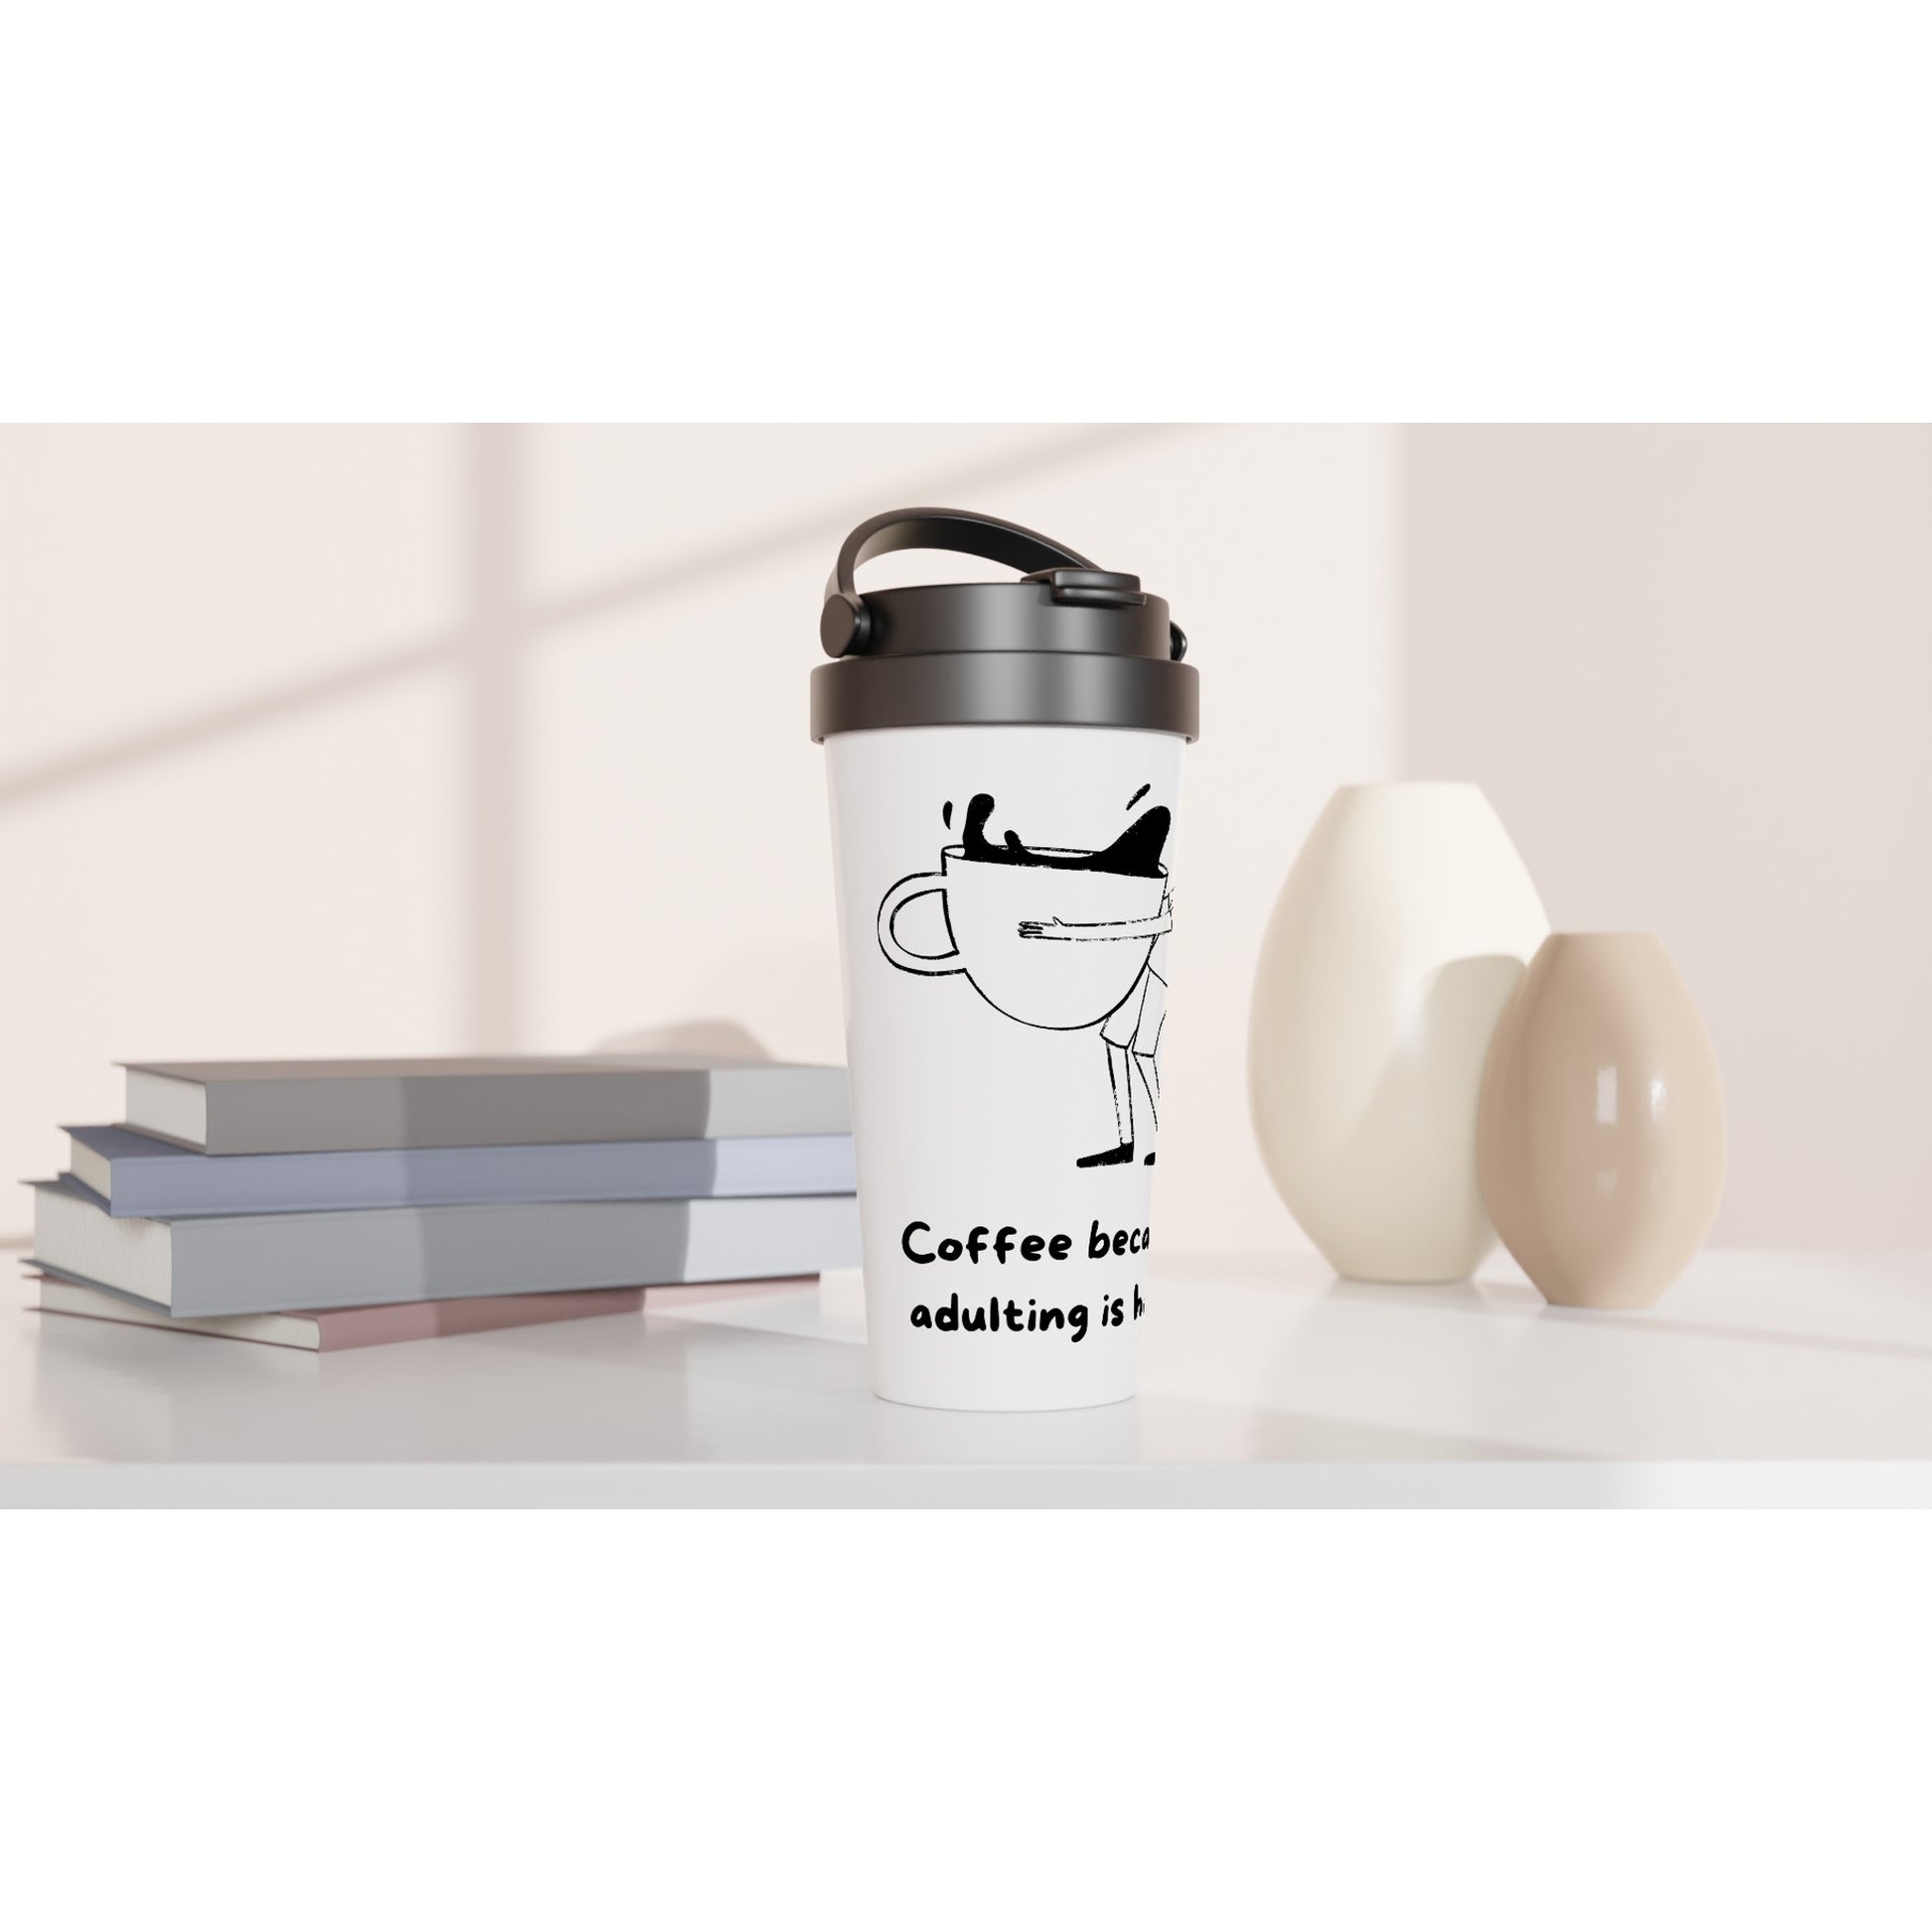 Coffee, Because Adulting Is Hard - White 15oz Stainless Steel Travel Mug Travel Mug Coffee